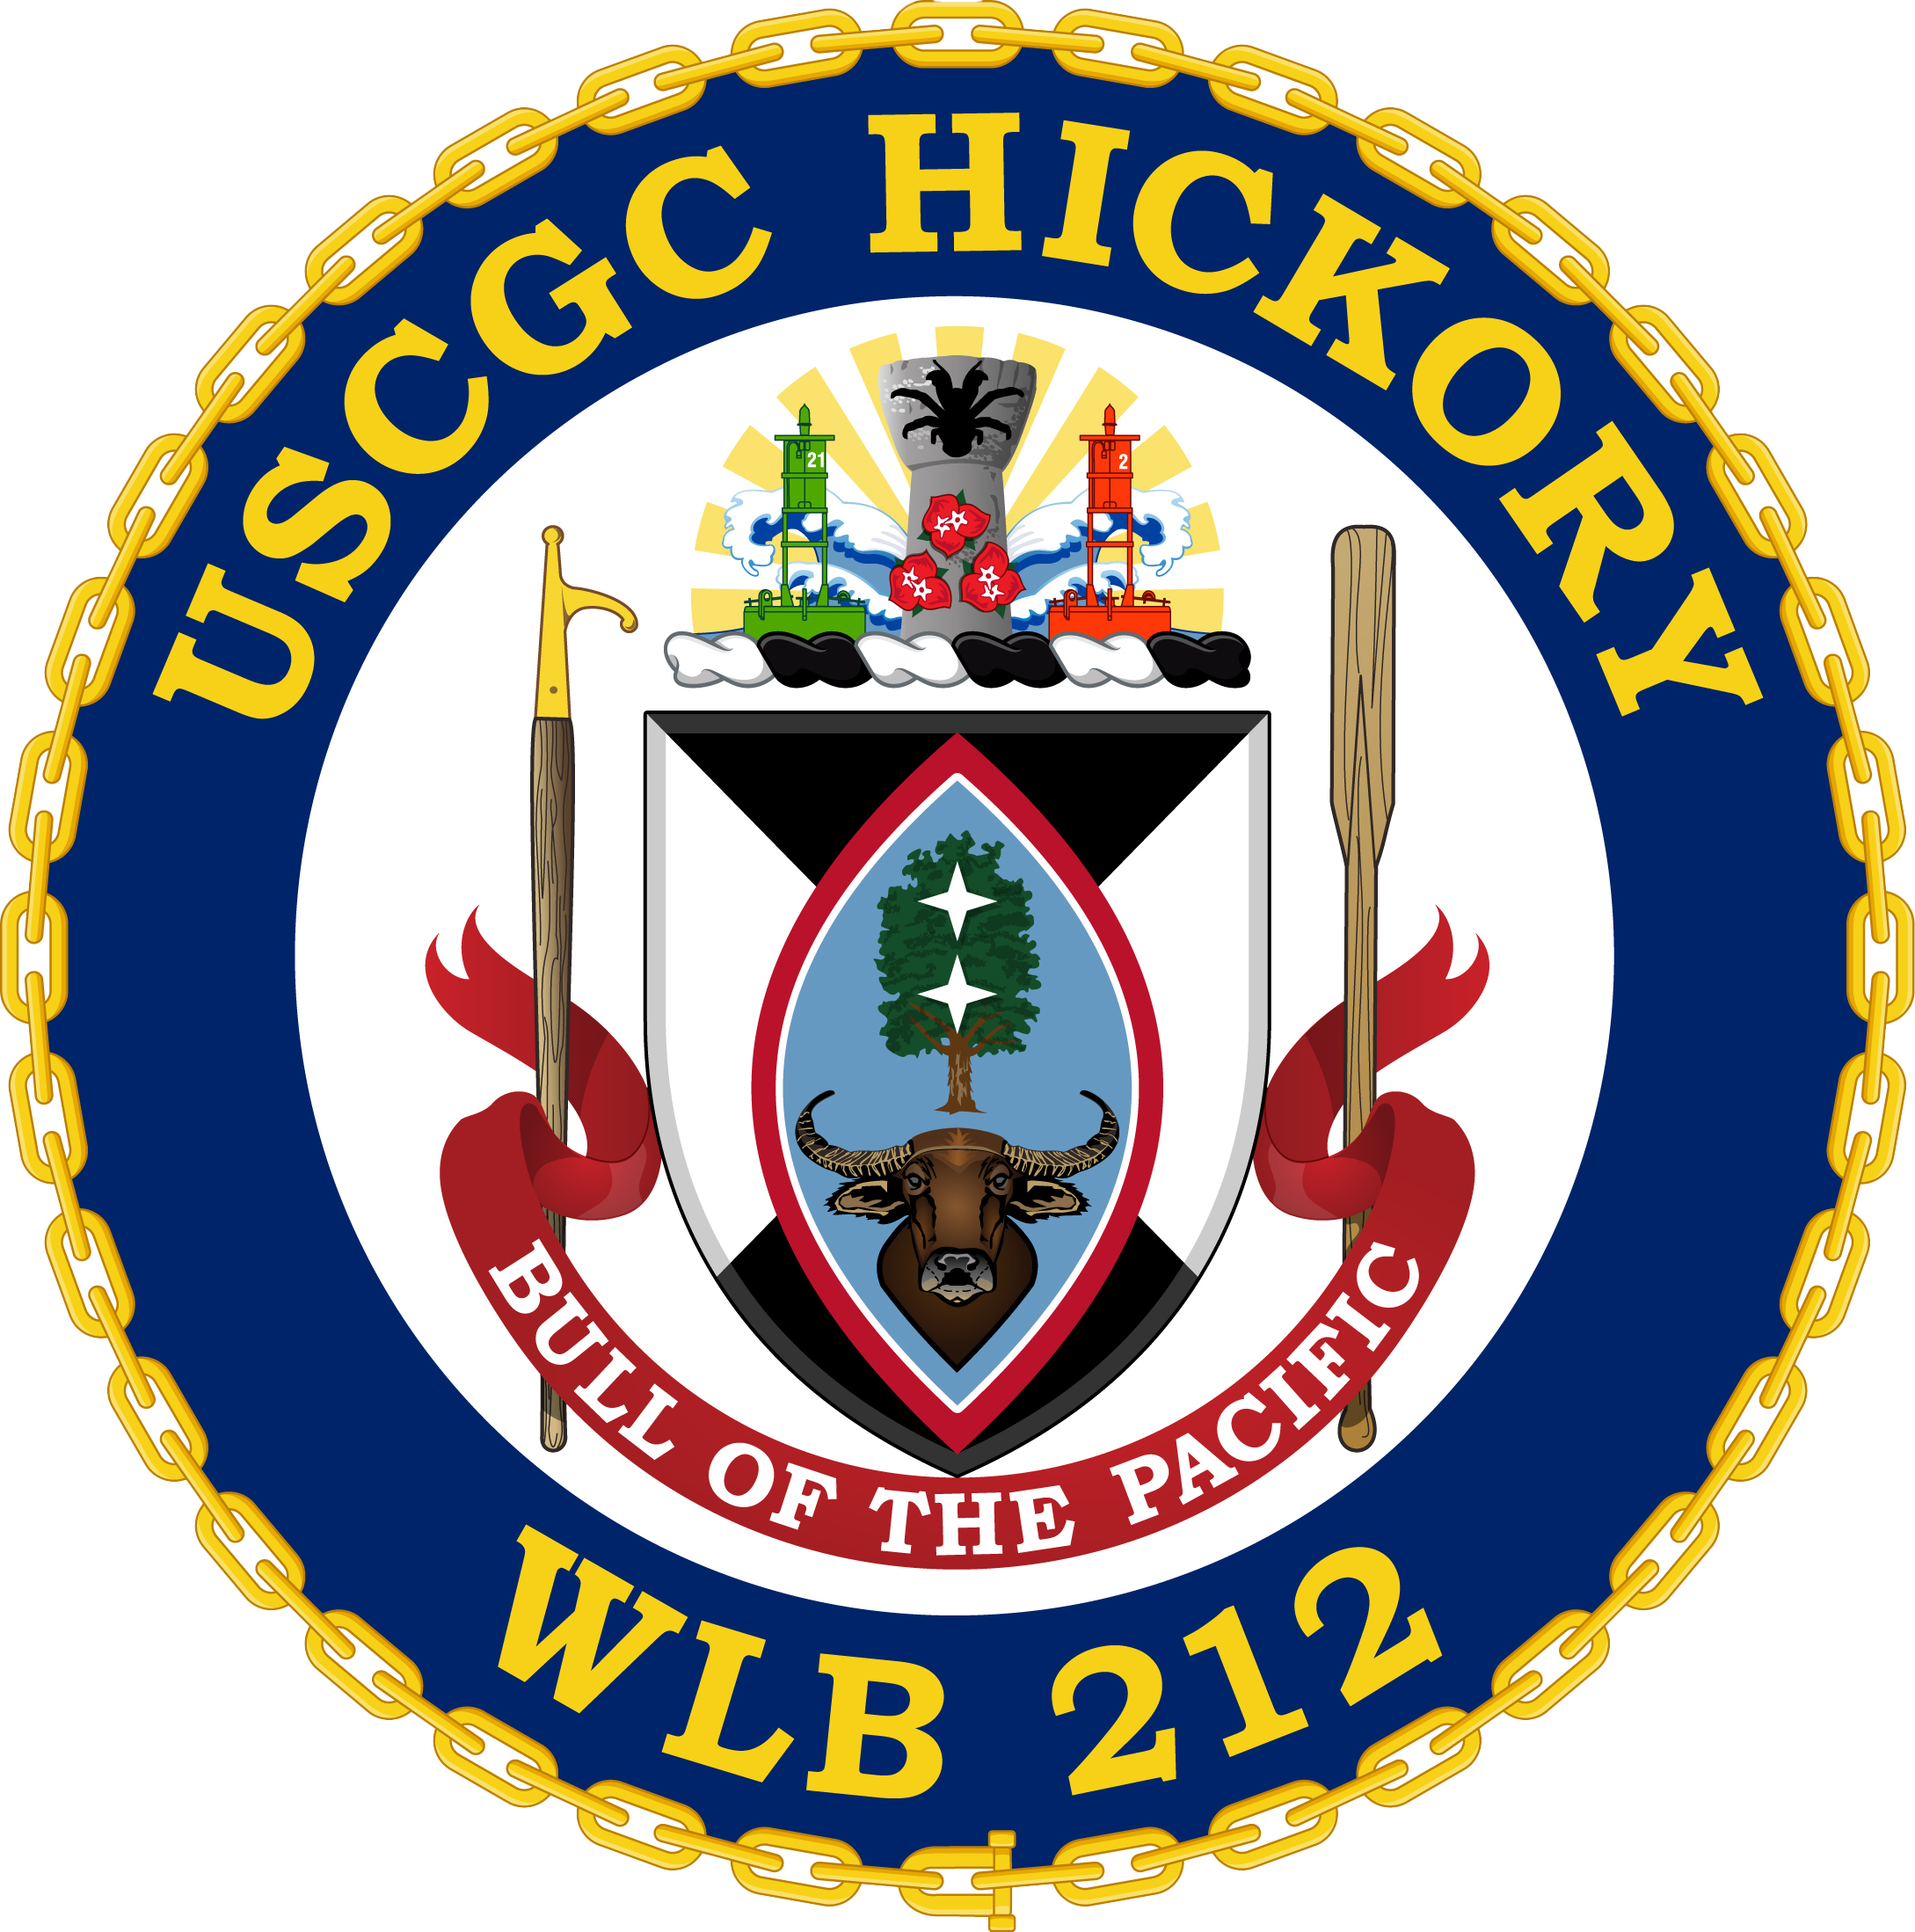 CGC HICKORY Seal/Logo